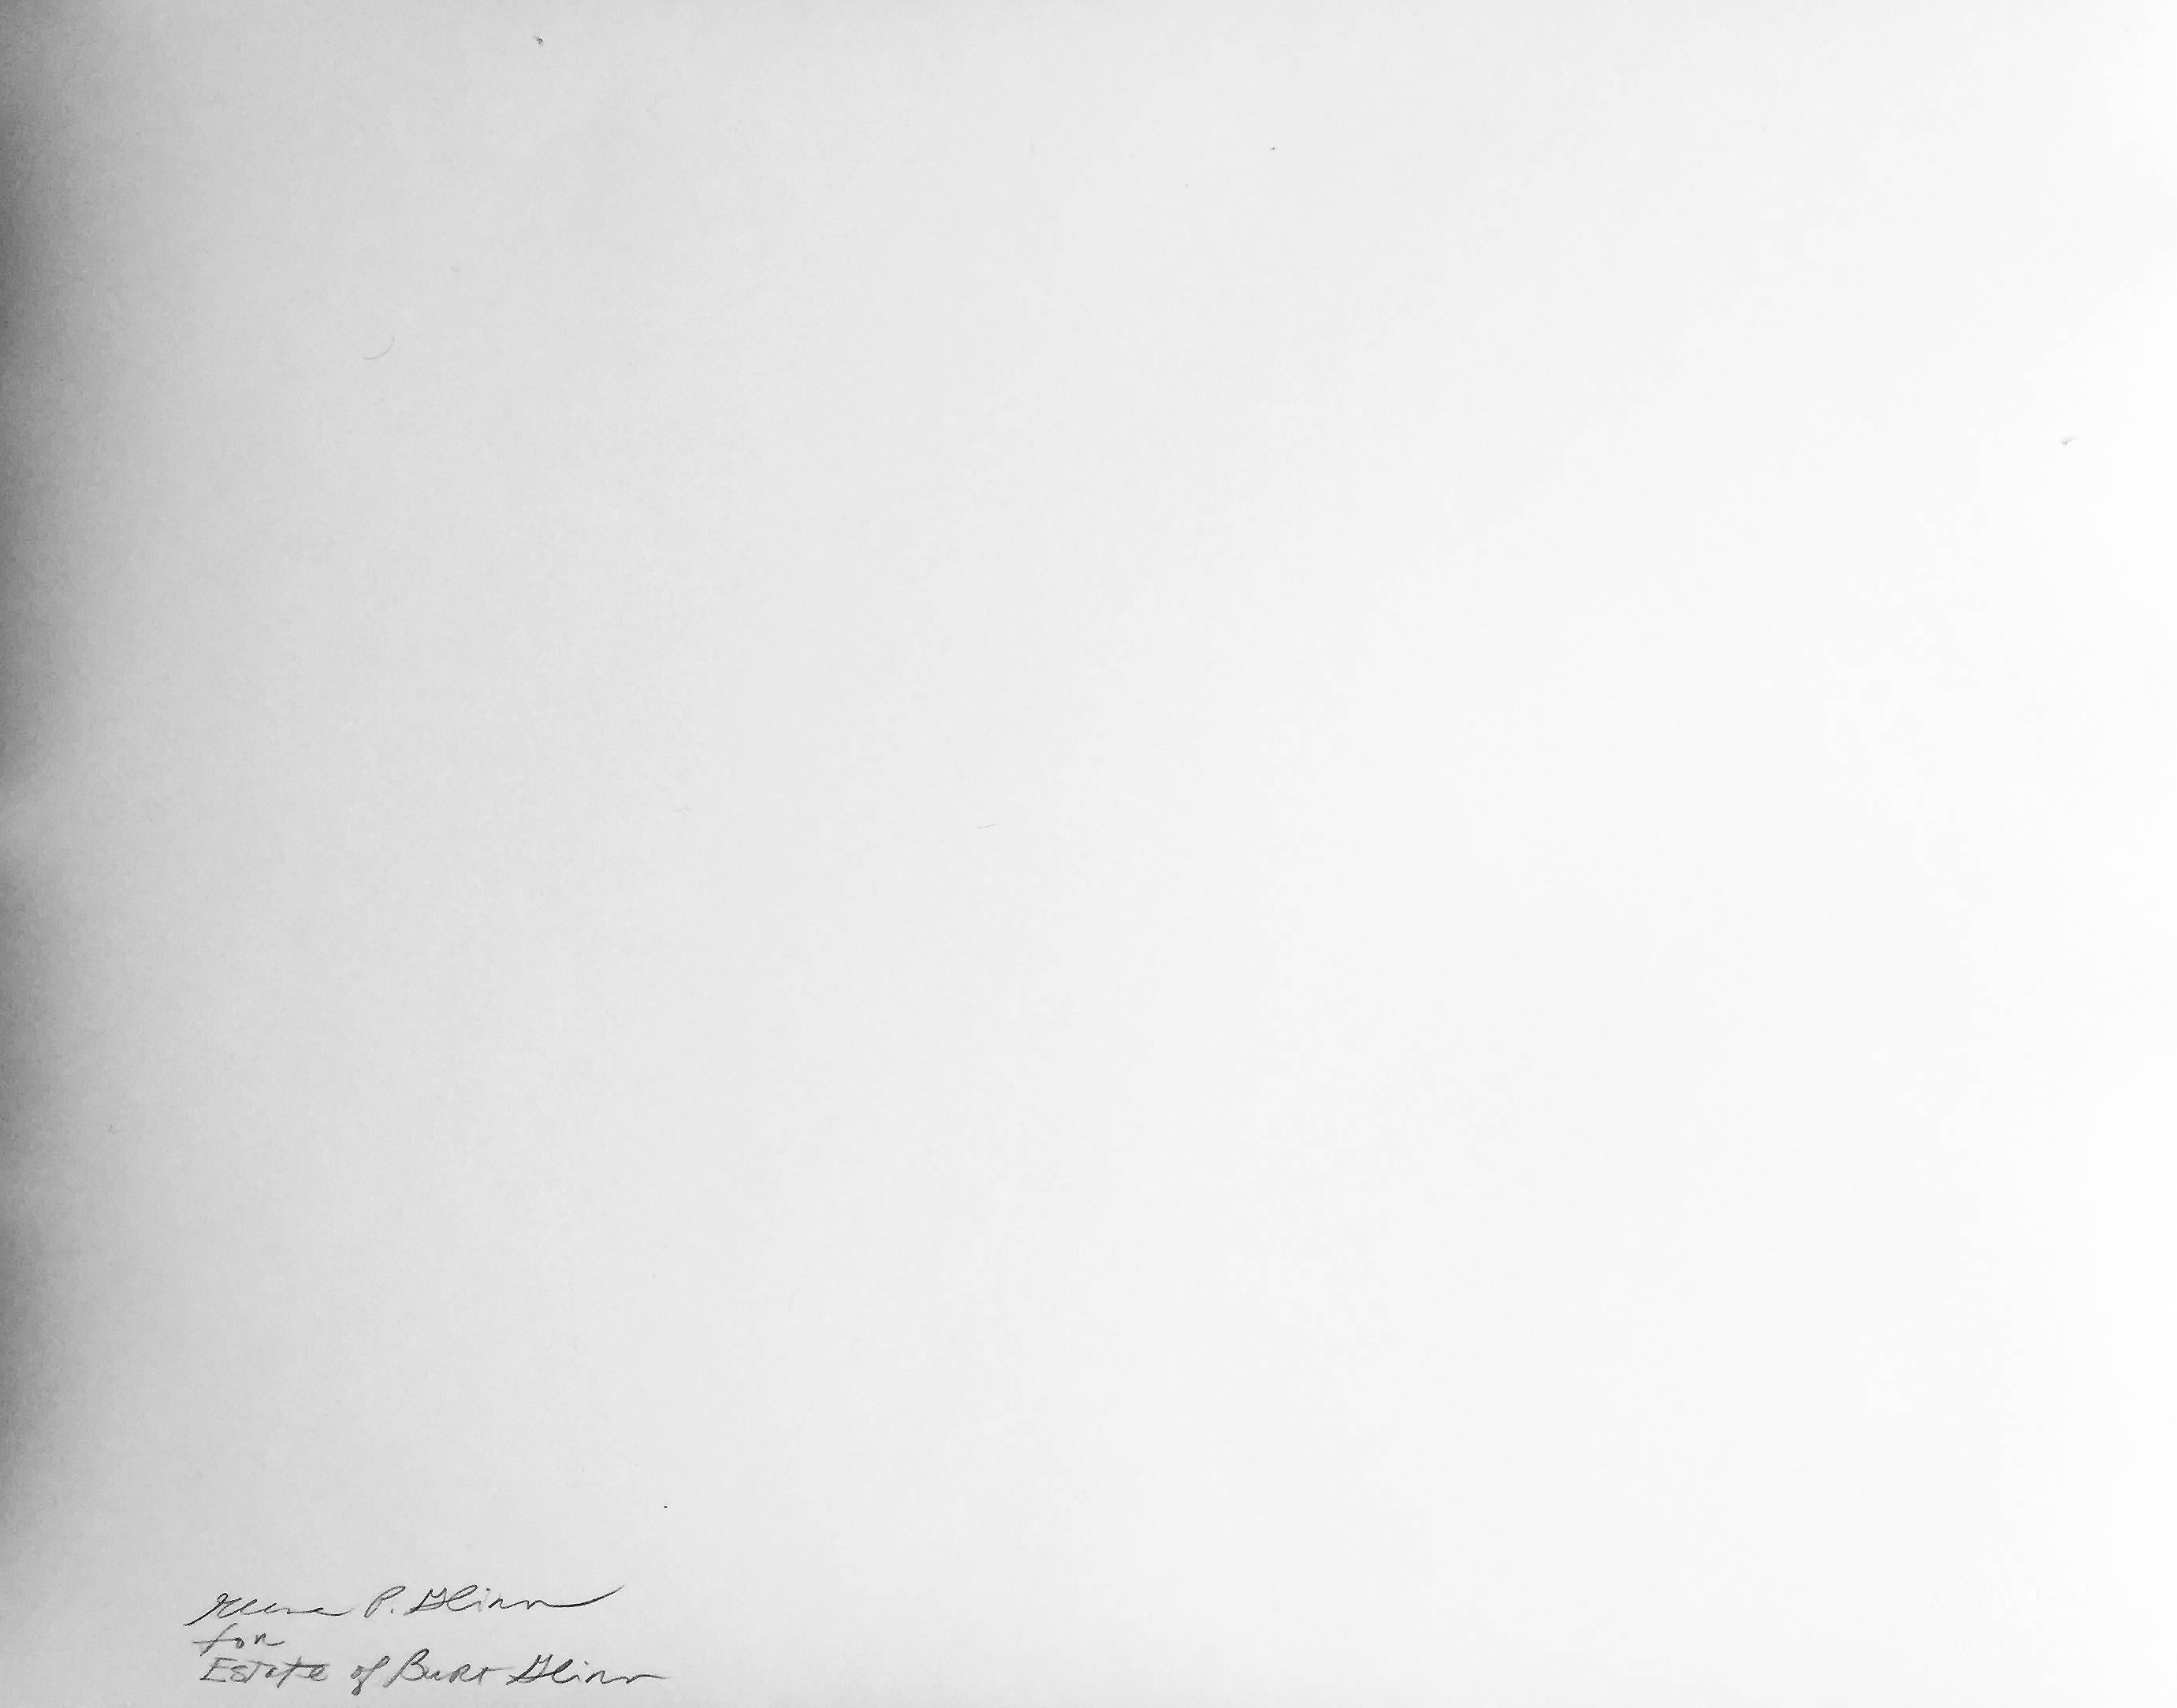 Helen Frankenthaler and David Smith, New York, Portrait of Two American Artists  - Photograph by Burt Glinn